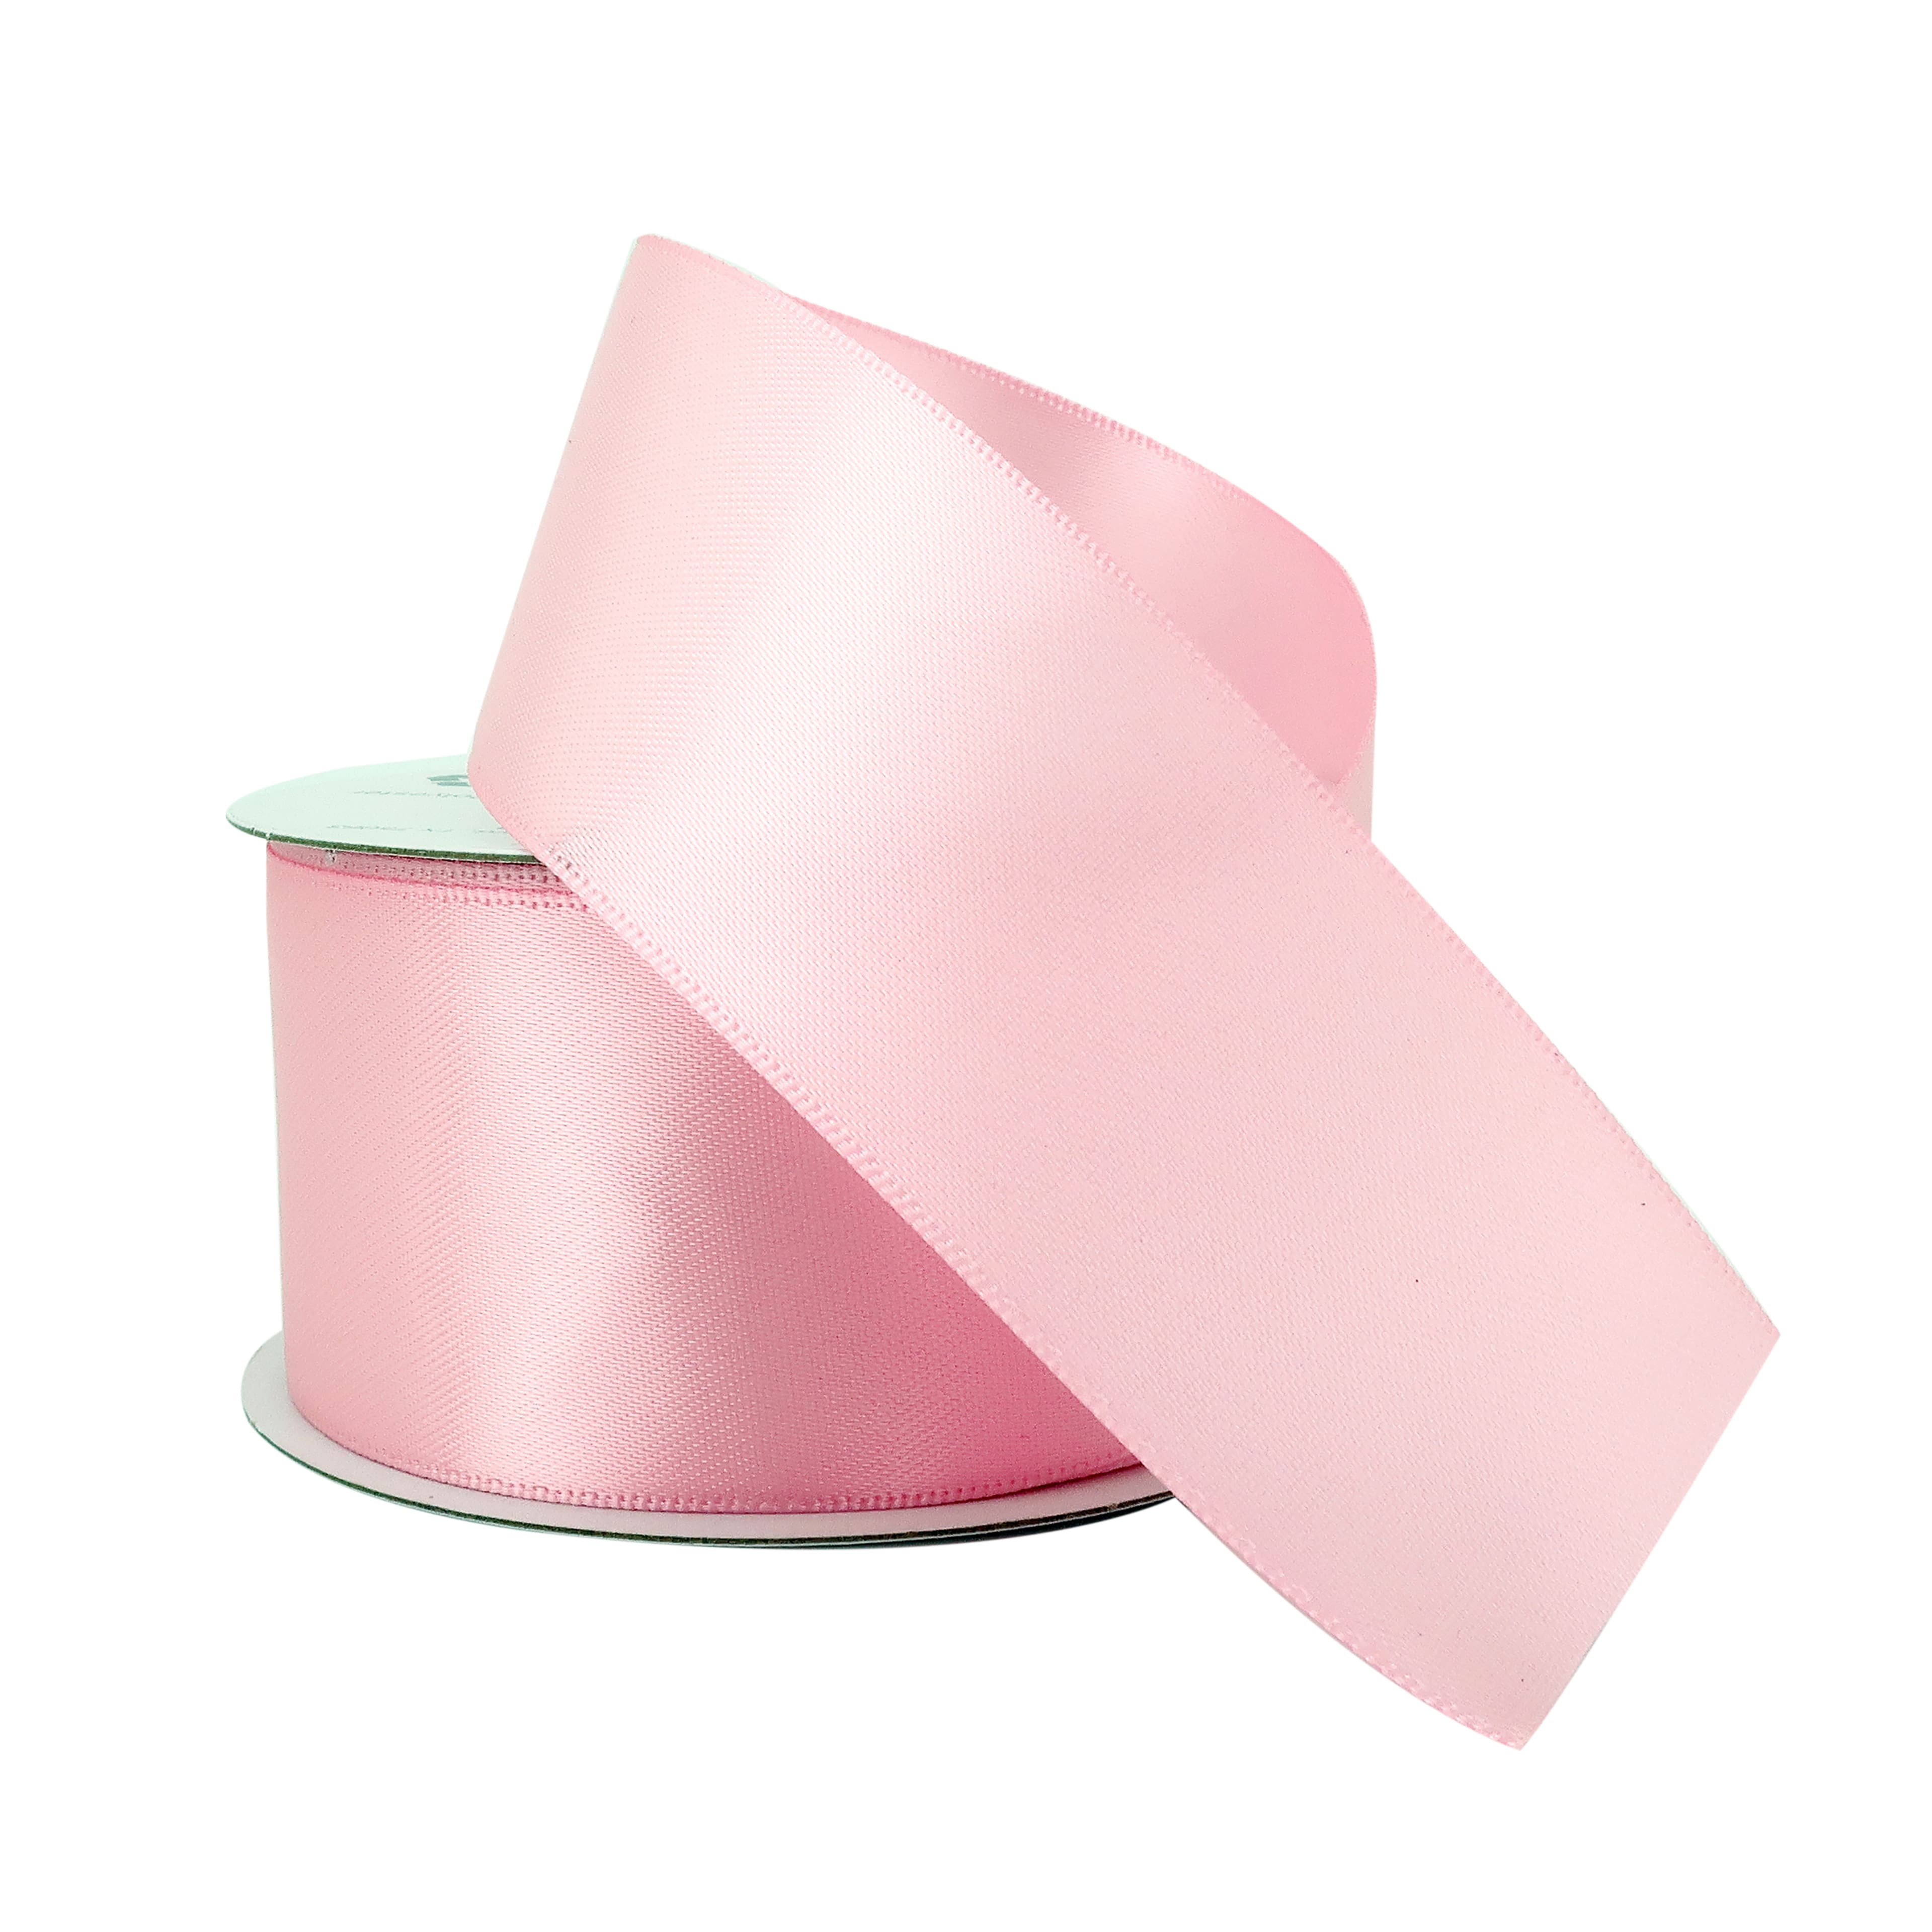 5.375 Encrusted Glitter Ribbon by Celebrate It®